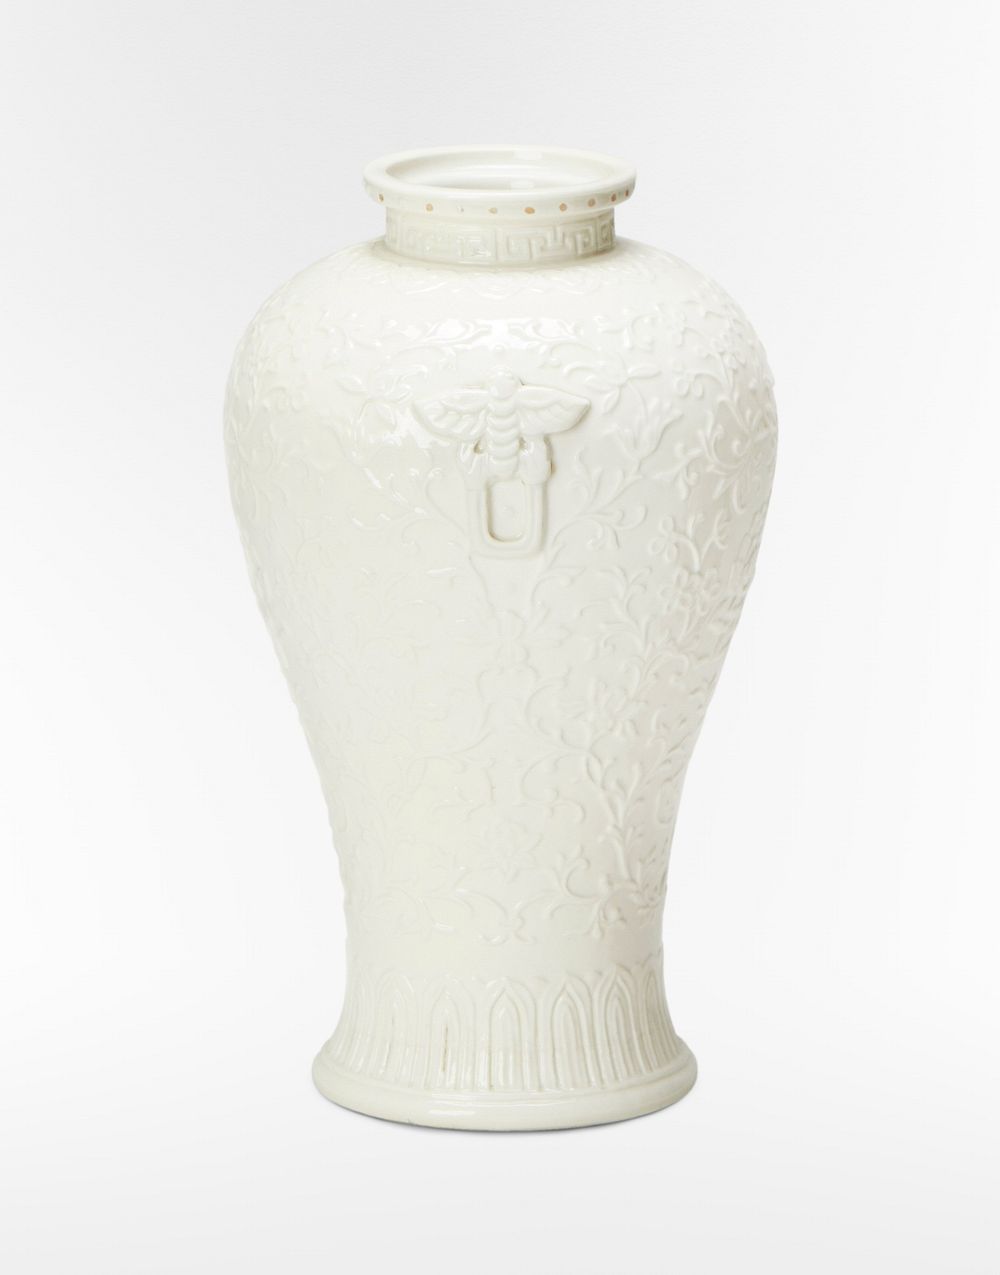 White porcelain vase. Original from the Minneapolis Institute of Art.